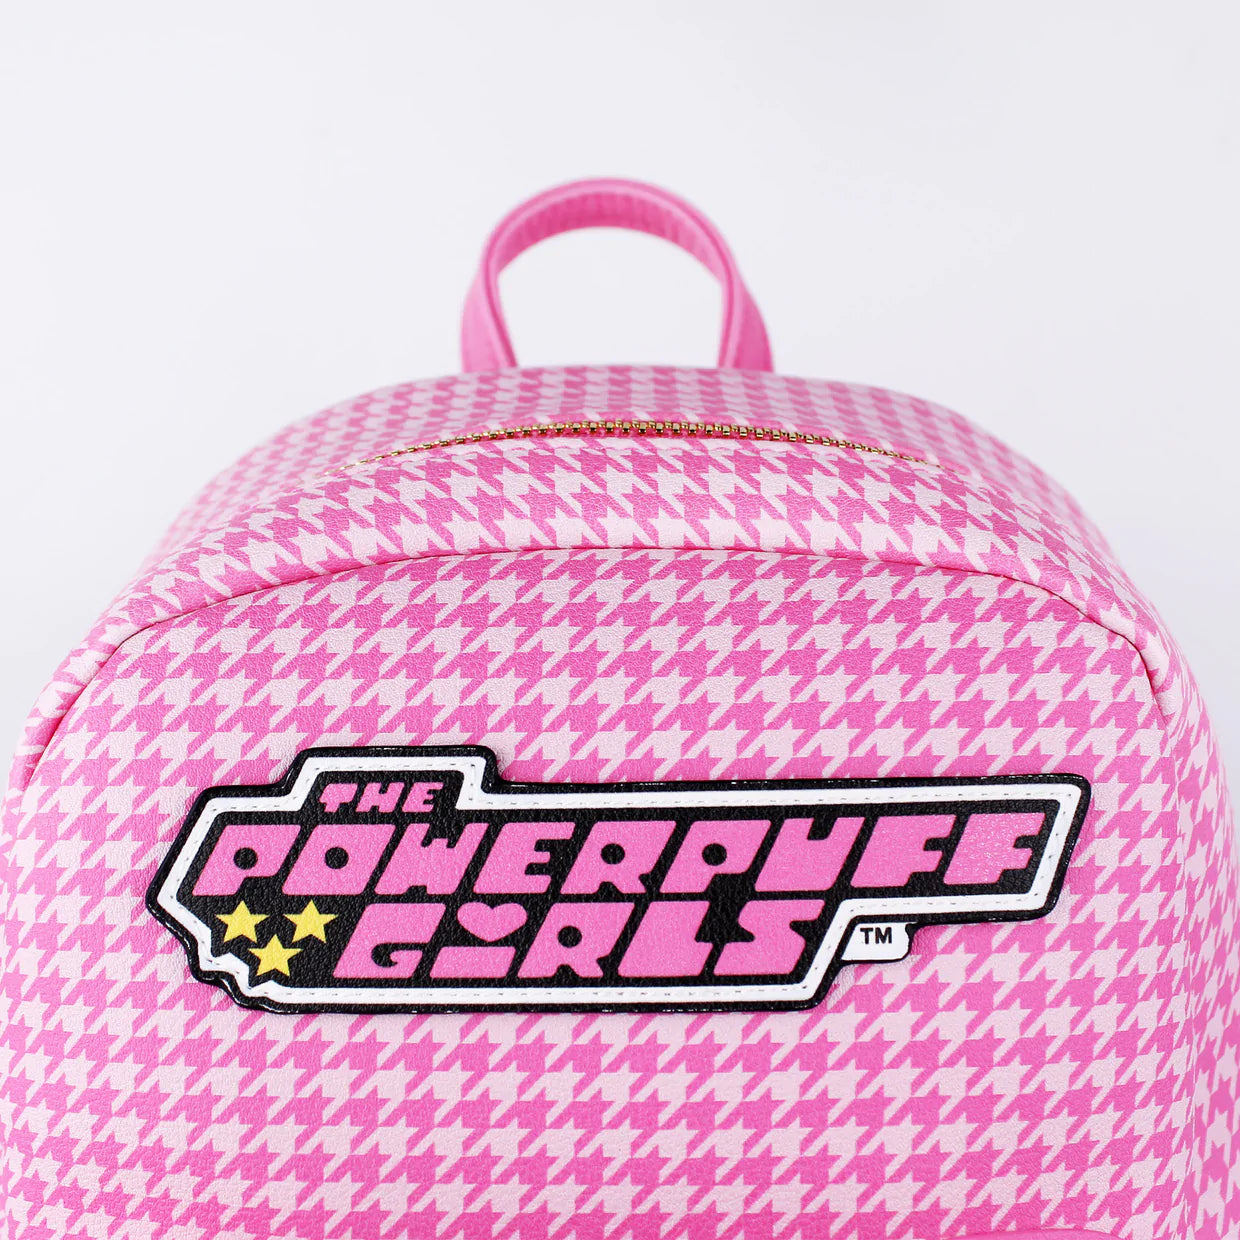 Cartoon Network | The Powerpuff Girls Houndstooth Mini Backpack